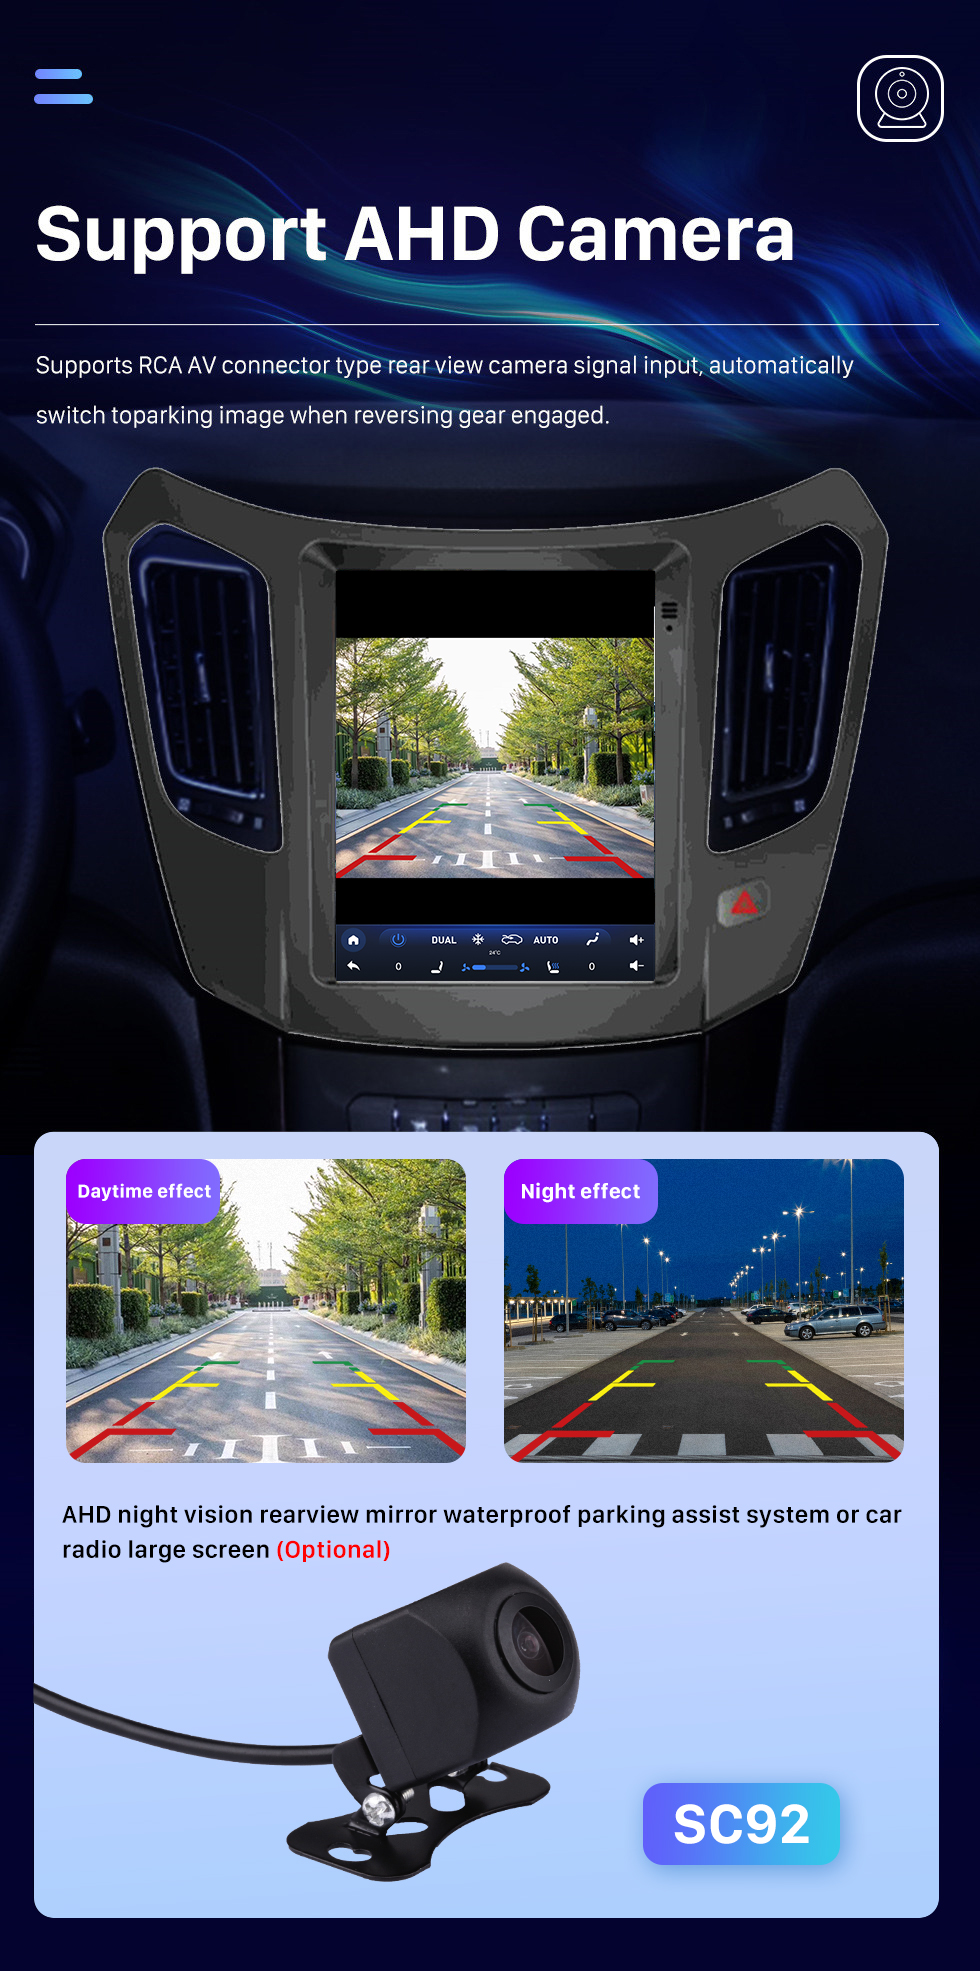 Seicane HD Touchscreen for 2013-2015 HAIMA S7 Radio Android 10.0 9.7 inch GPS Navigation Bluetooth support Digital TV Carplay